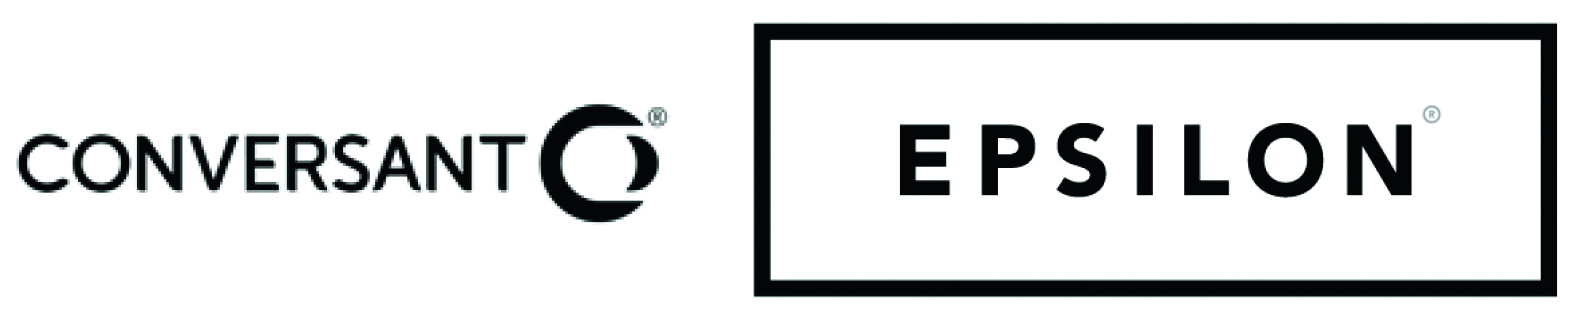 Conversant Epsilon logo